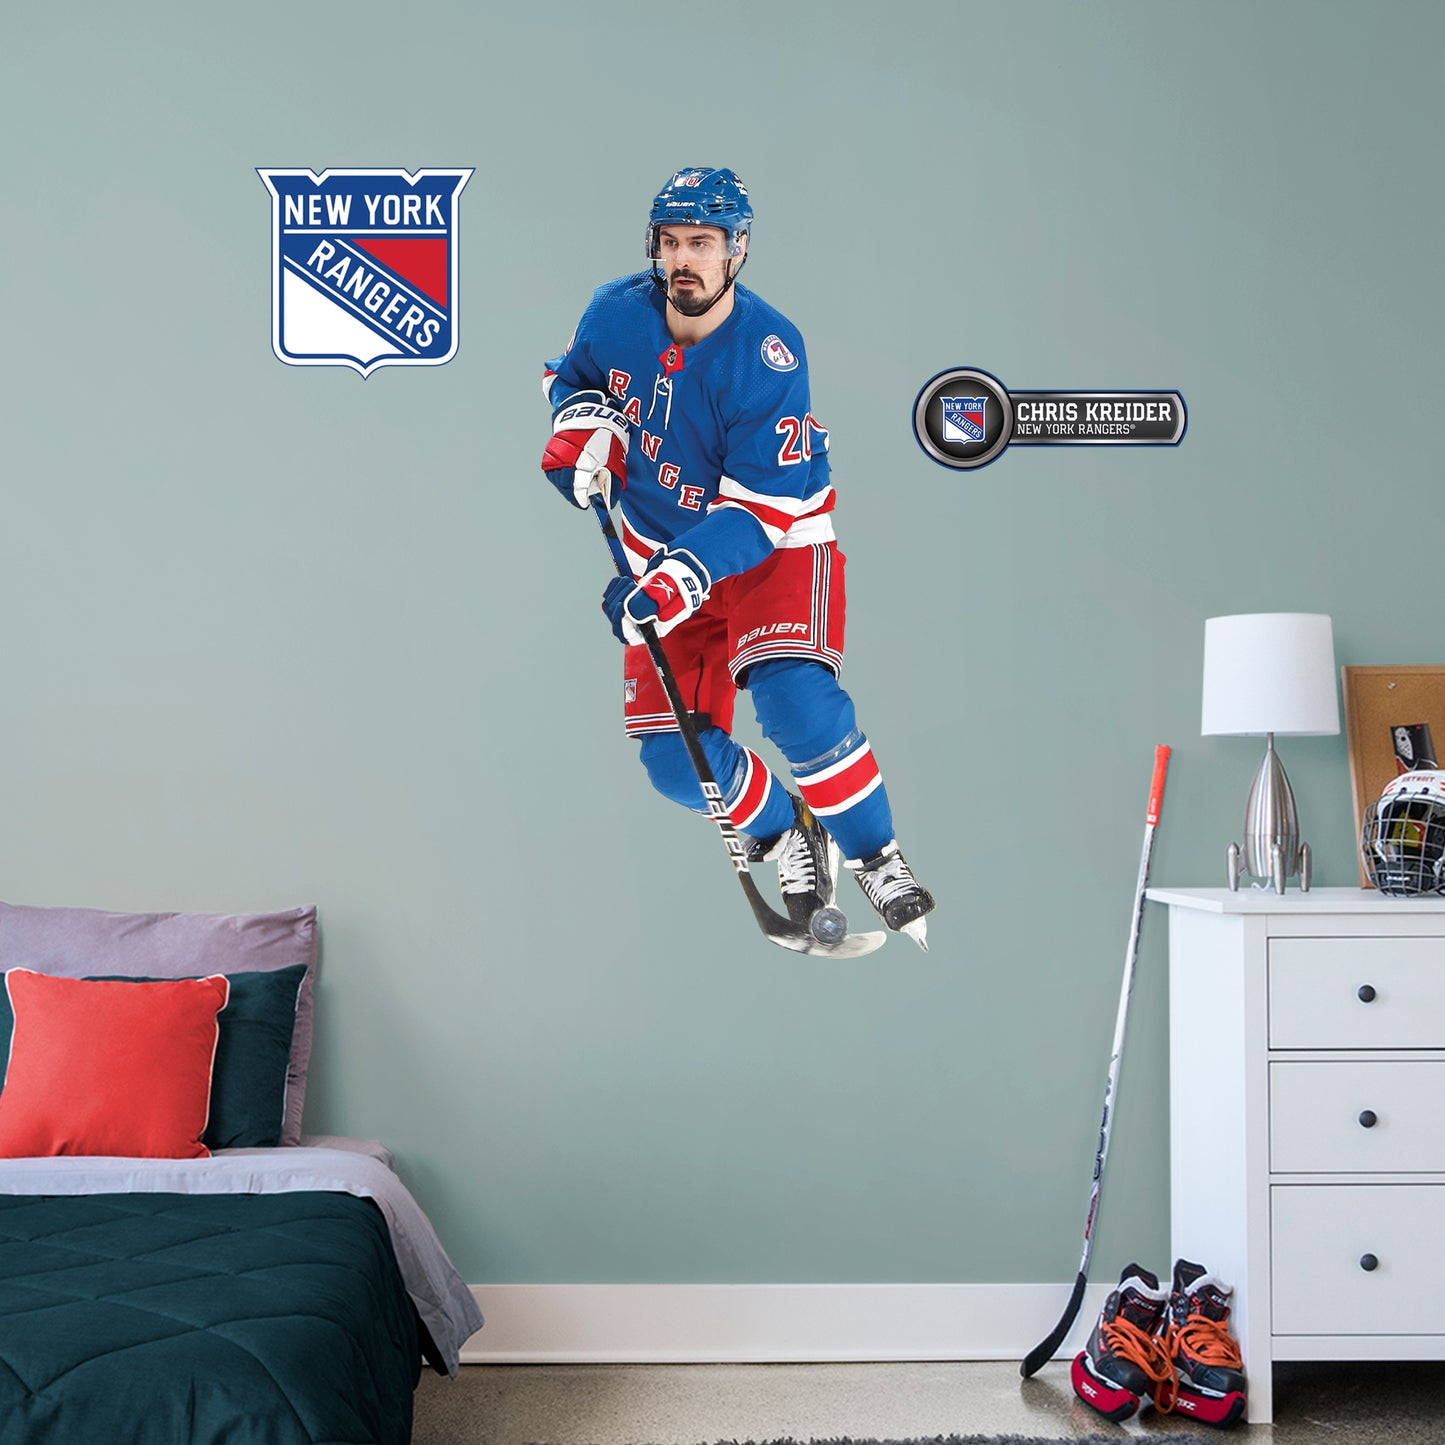 Chris Kreider Ice Hockey Room Decorate Wallpaper